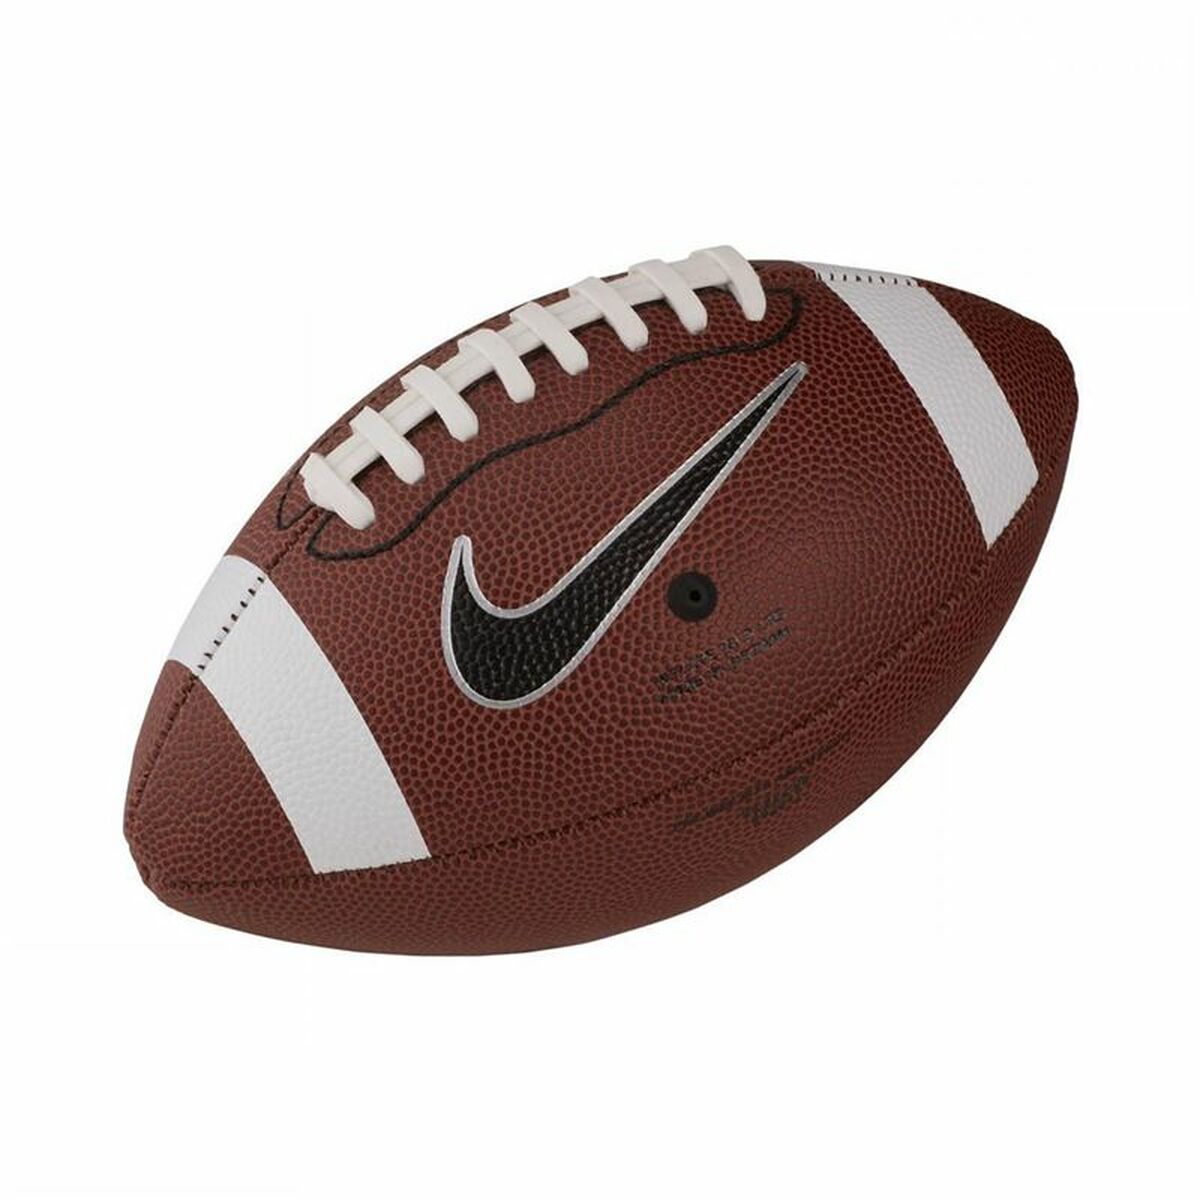 Ballon de football américain Nike All Field 3.0 Multicouleur 9